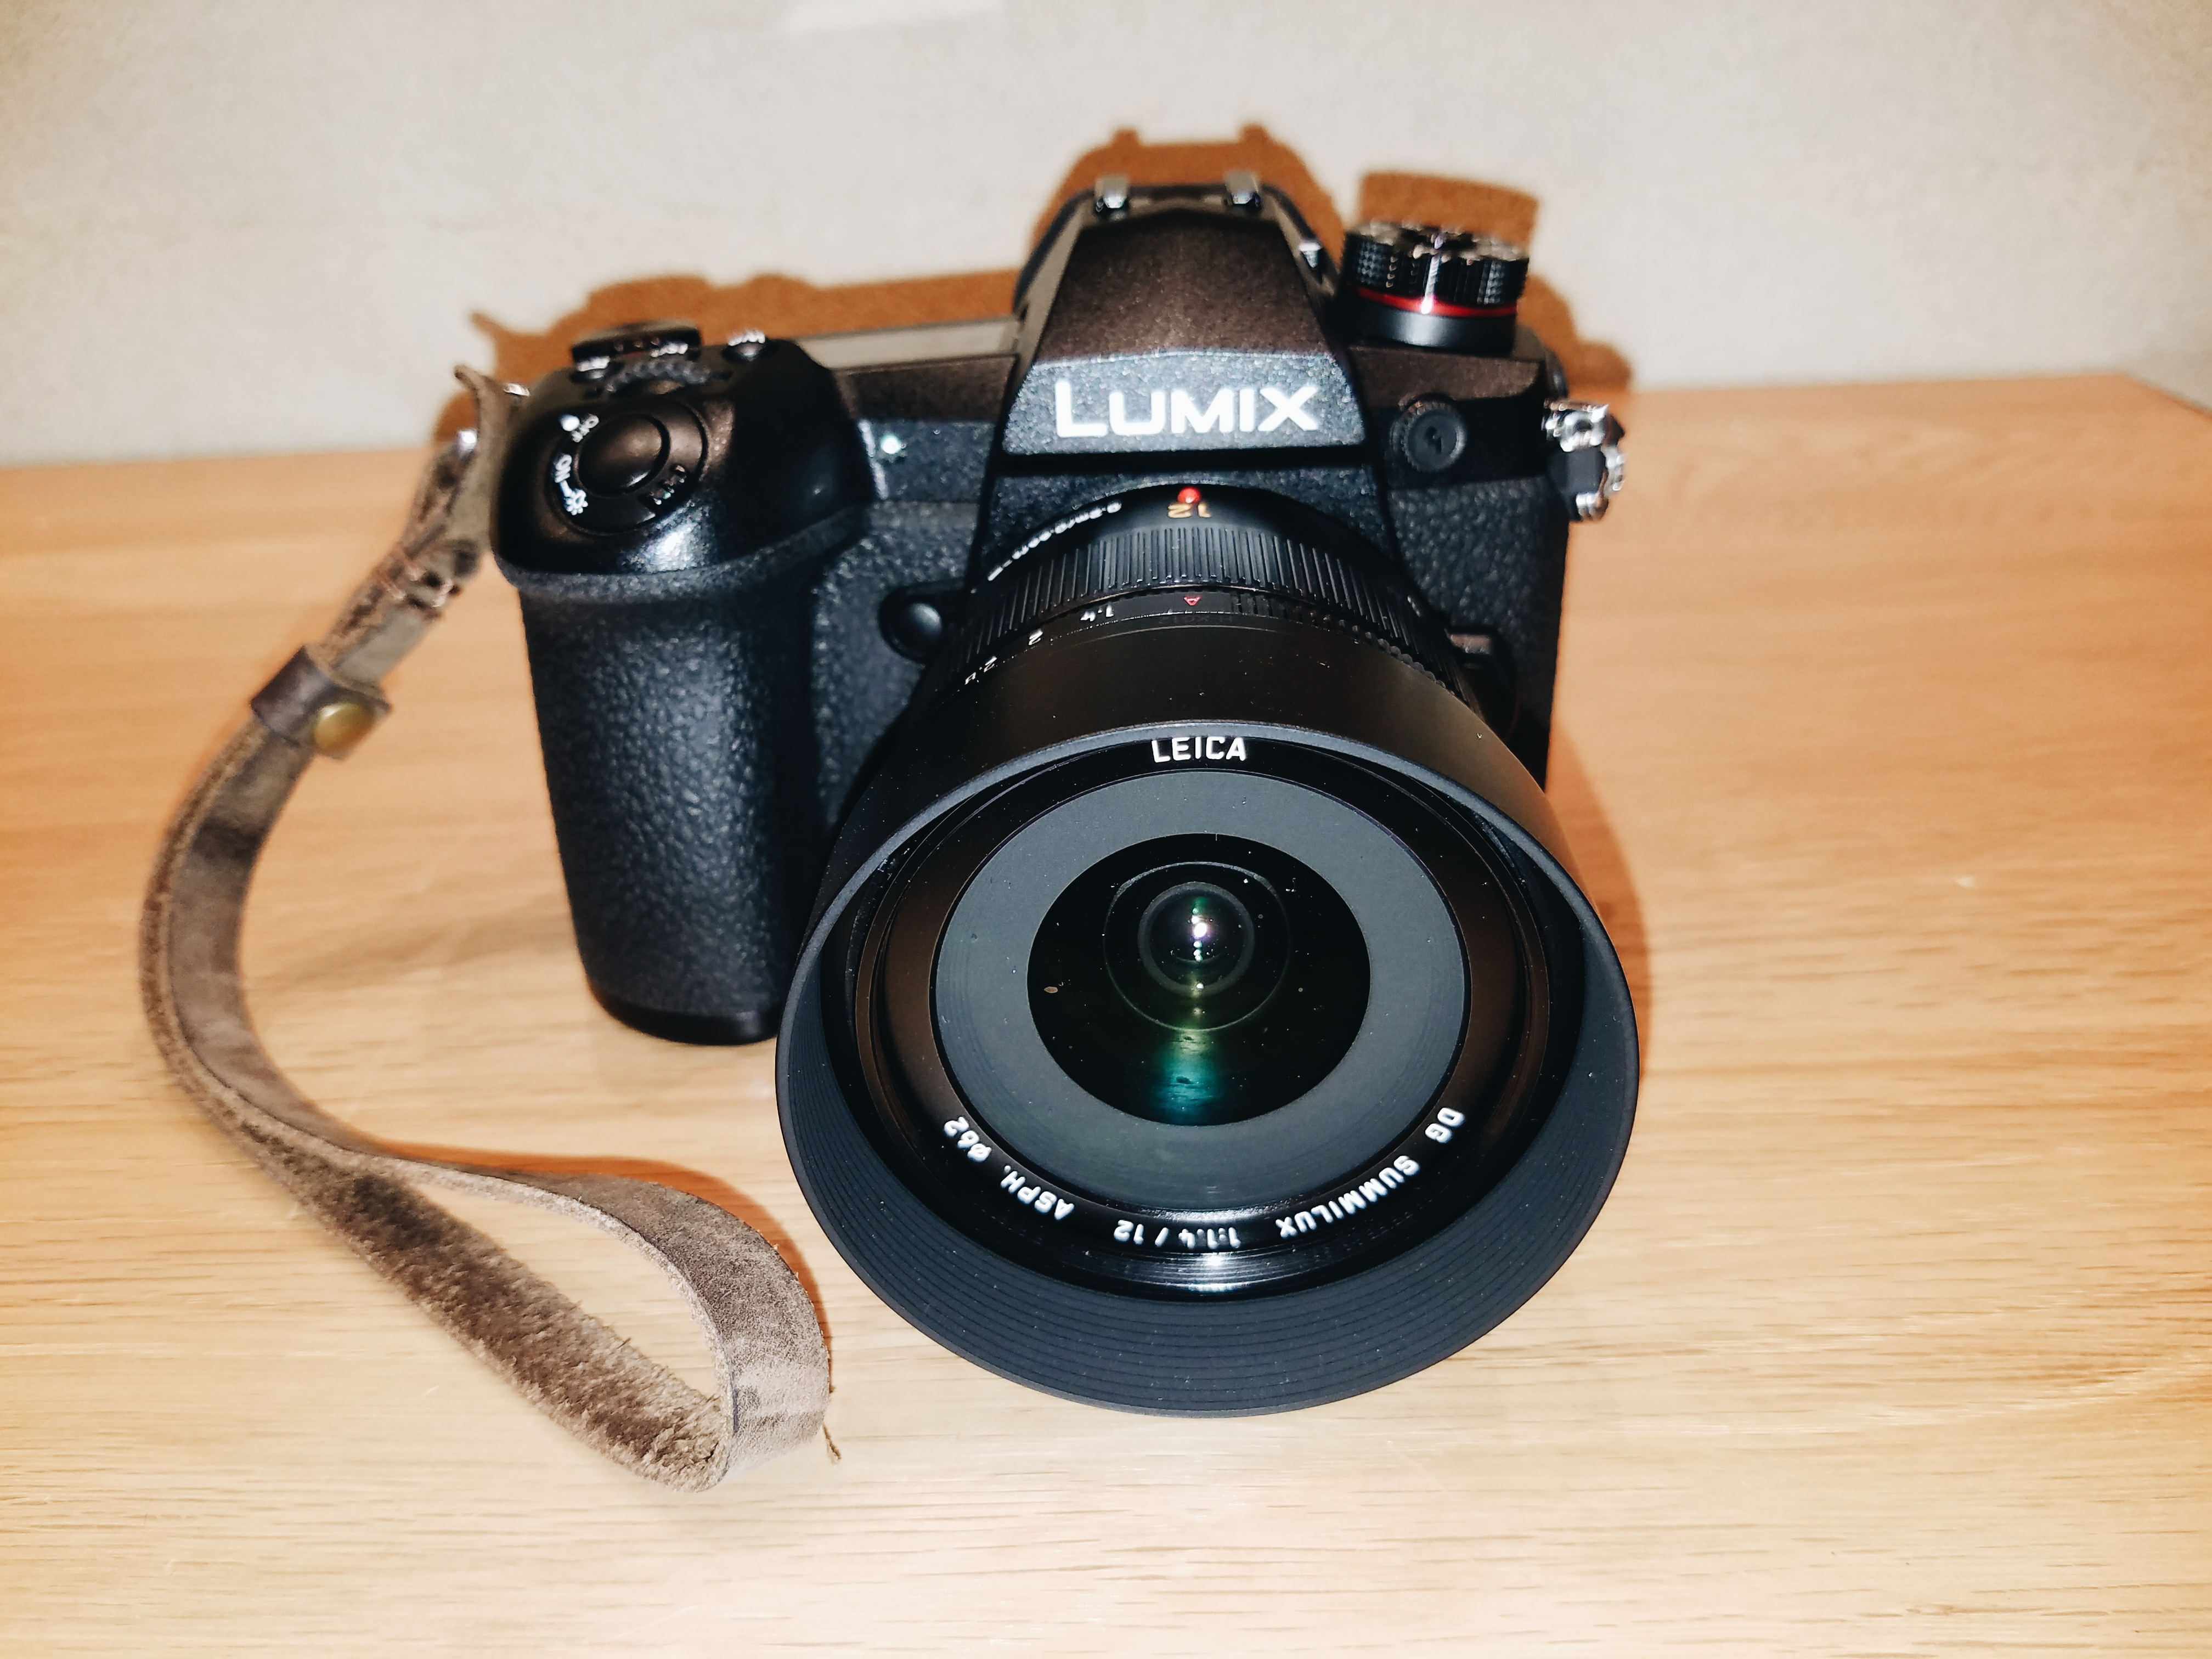 Lumix Panasonic g9 and 12mm f/1.4 Lens